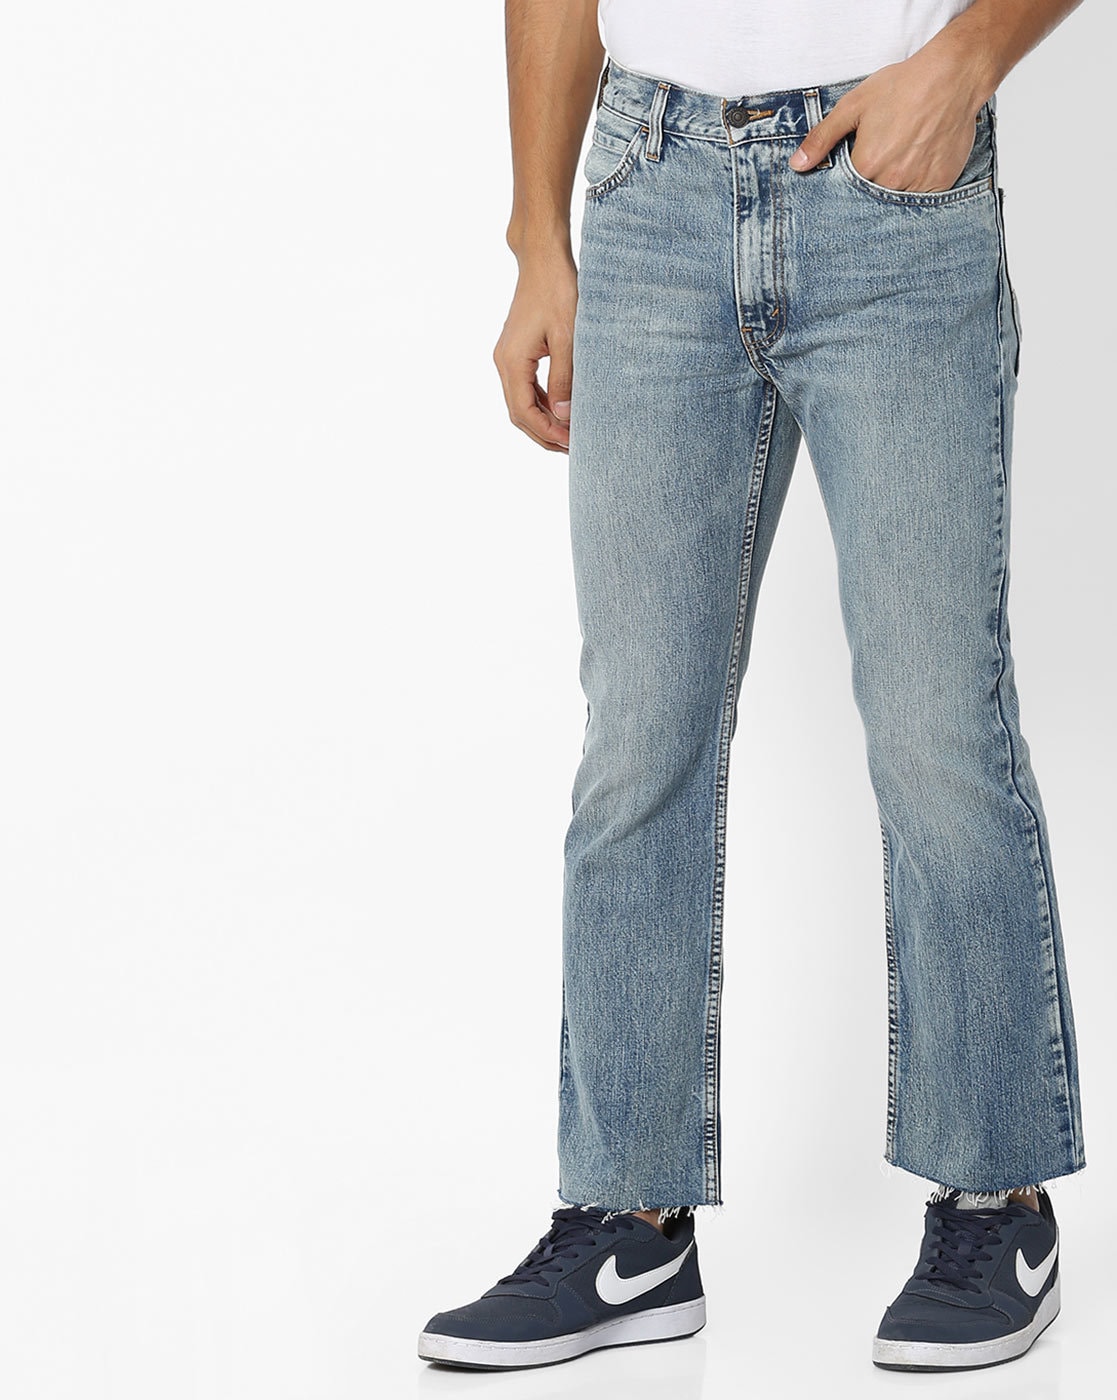 levis 517 jeans india